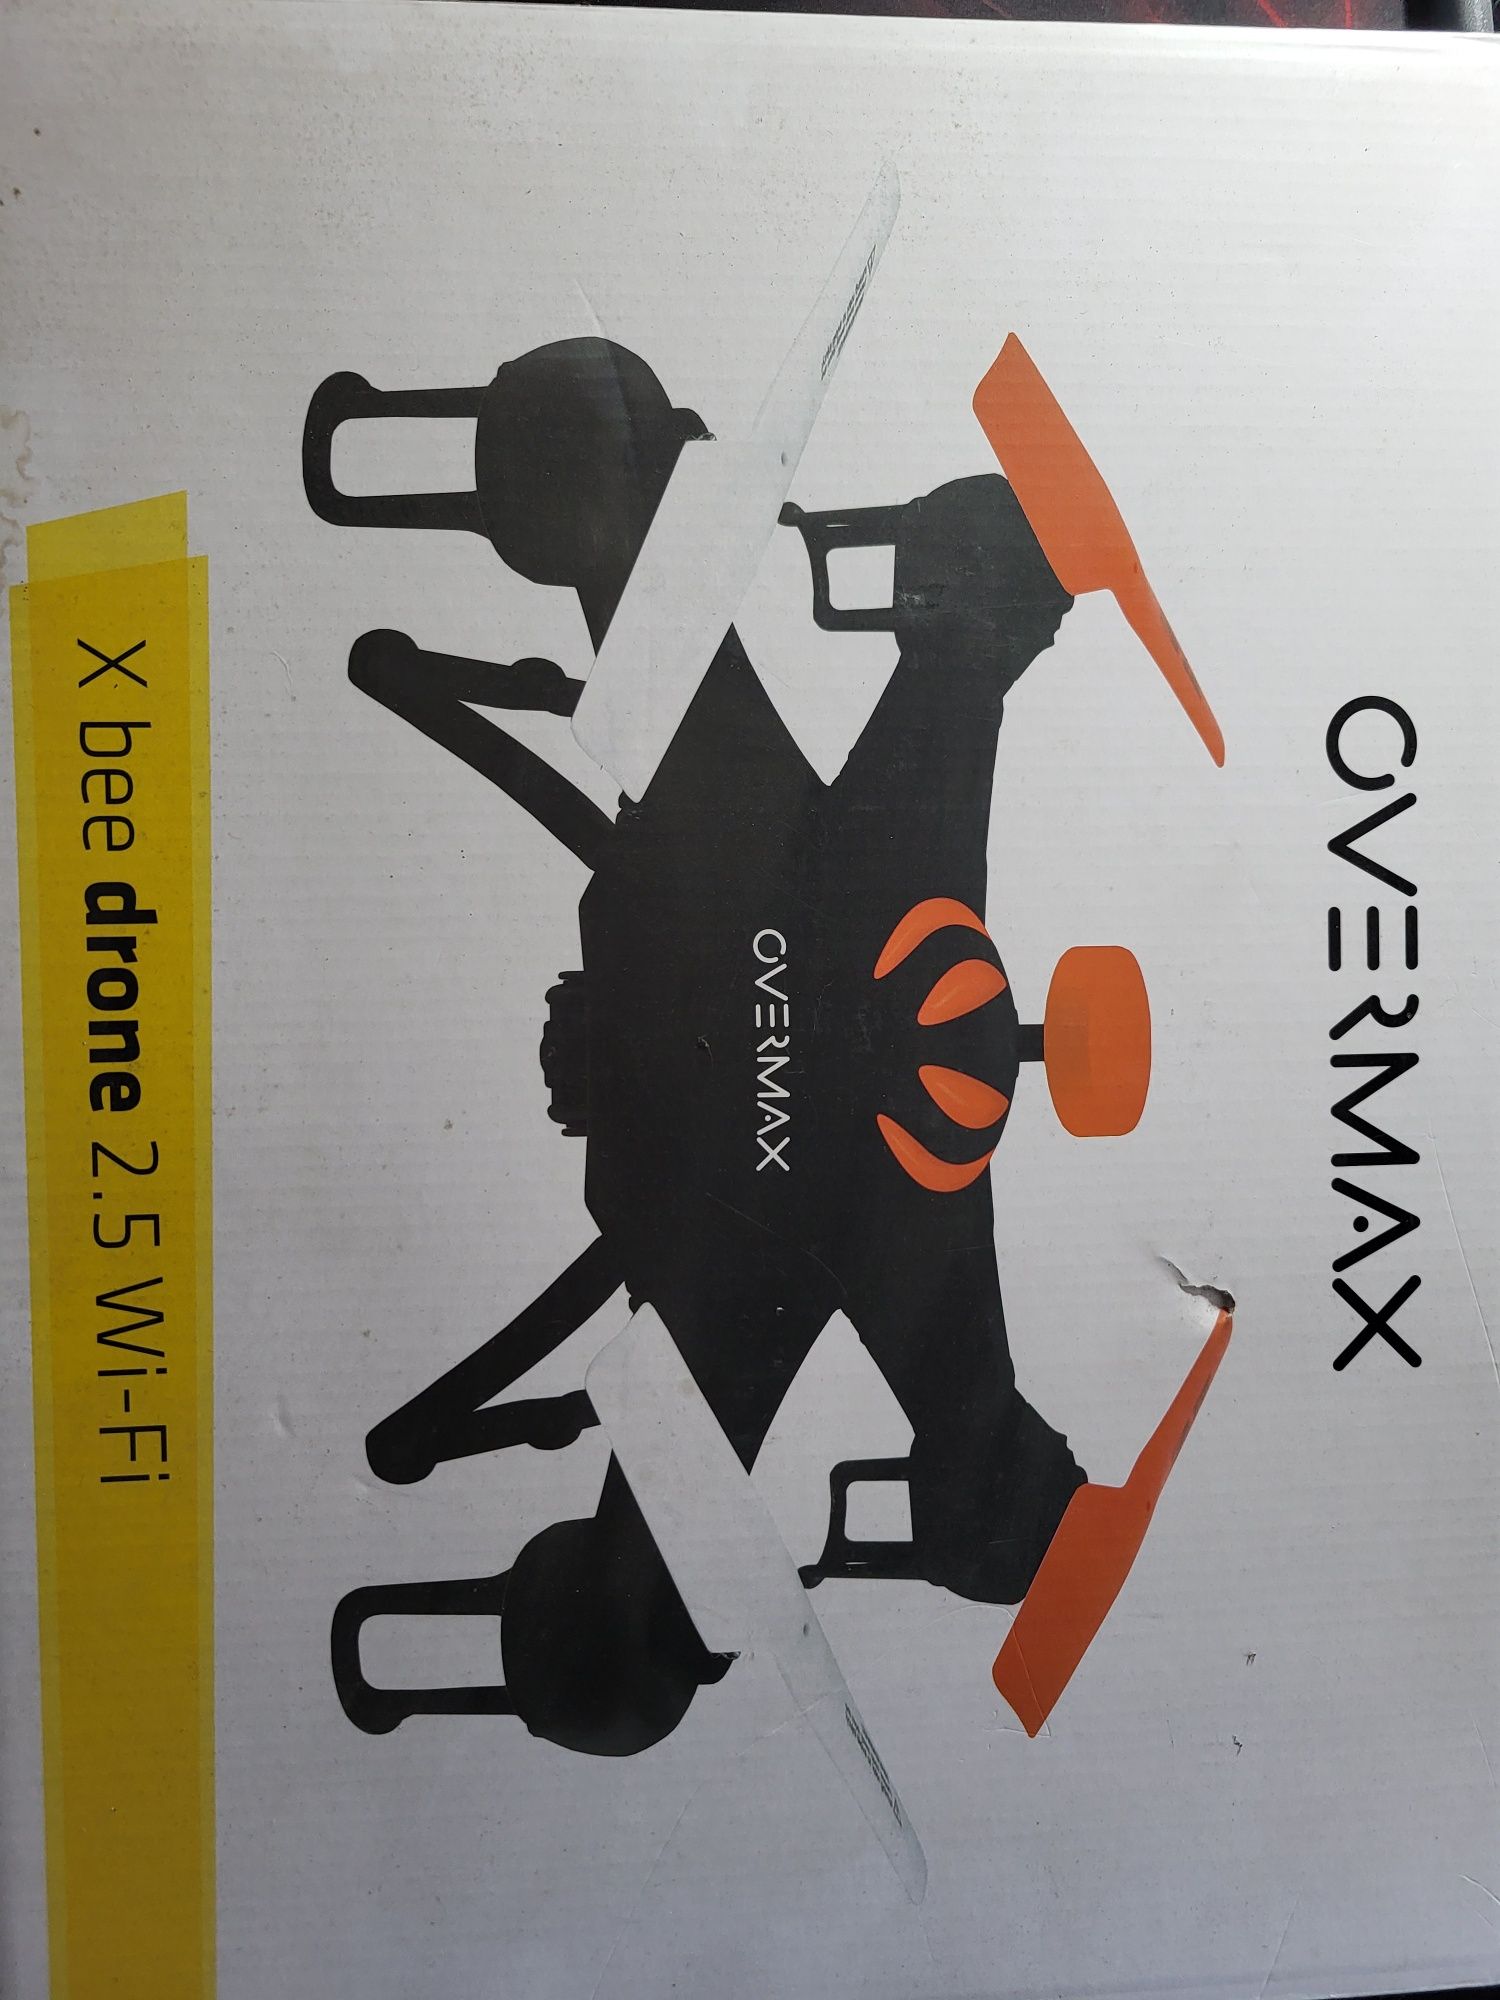 Overmax X bee drone 2.5 WiFi